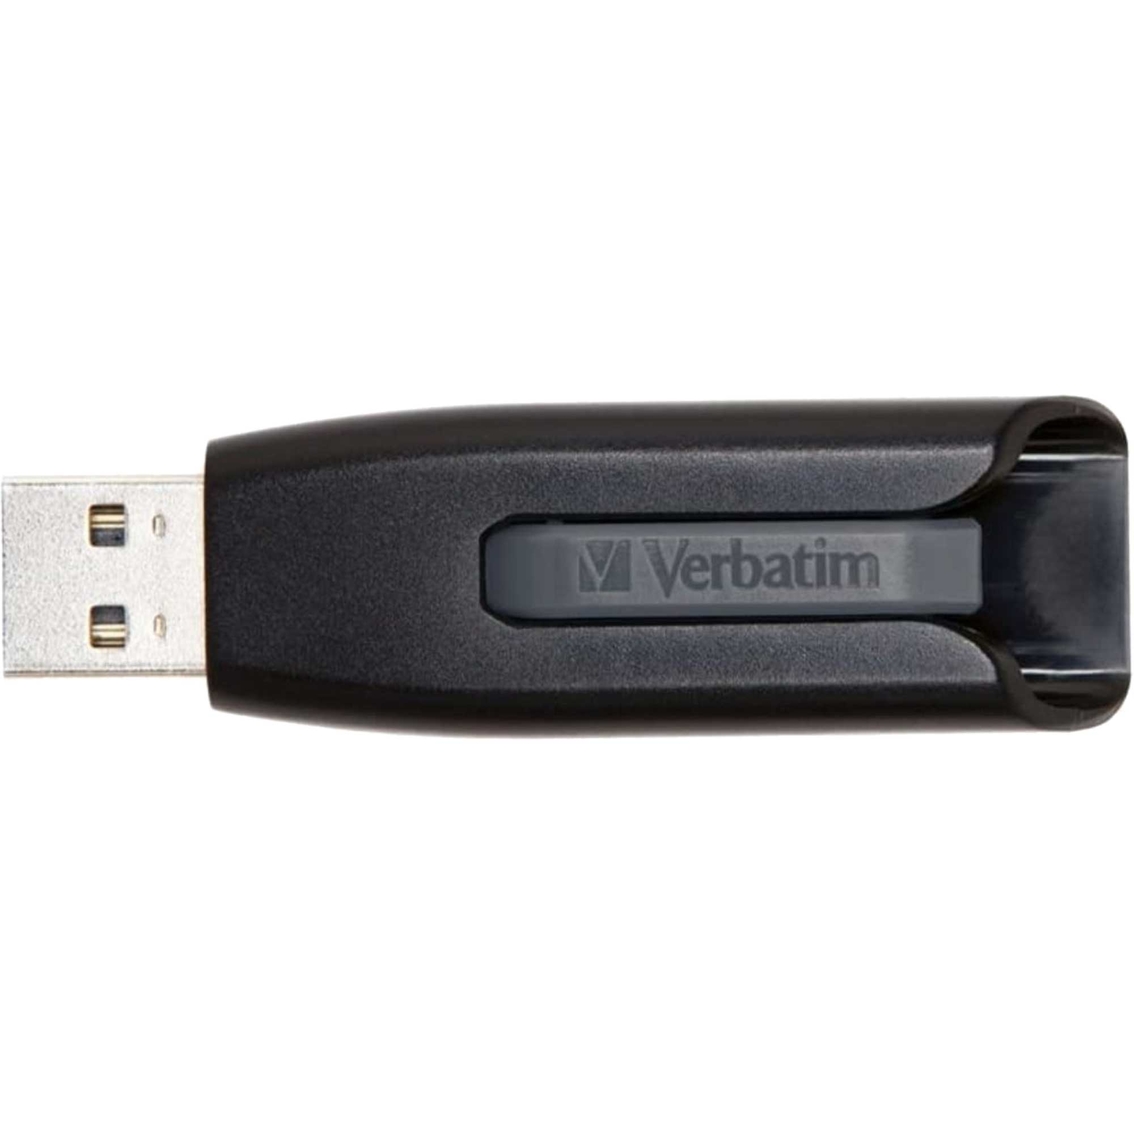 Verbatim 64GB Store 'n' Go V3 USB 3.0 Flash Drive - Image 2 of 2